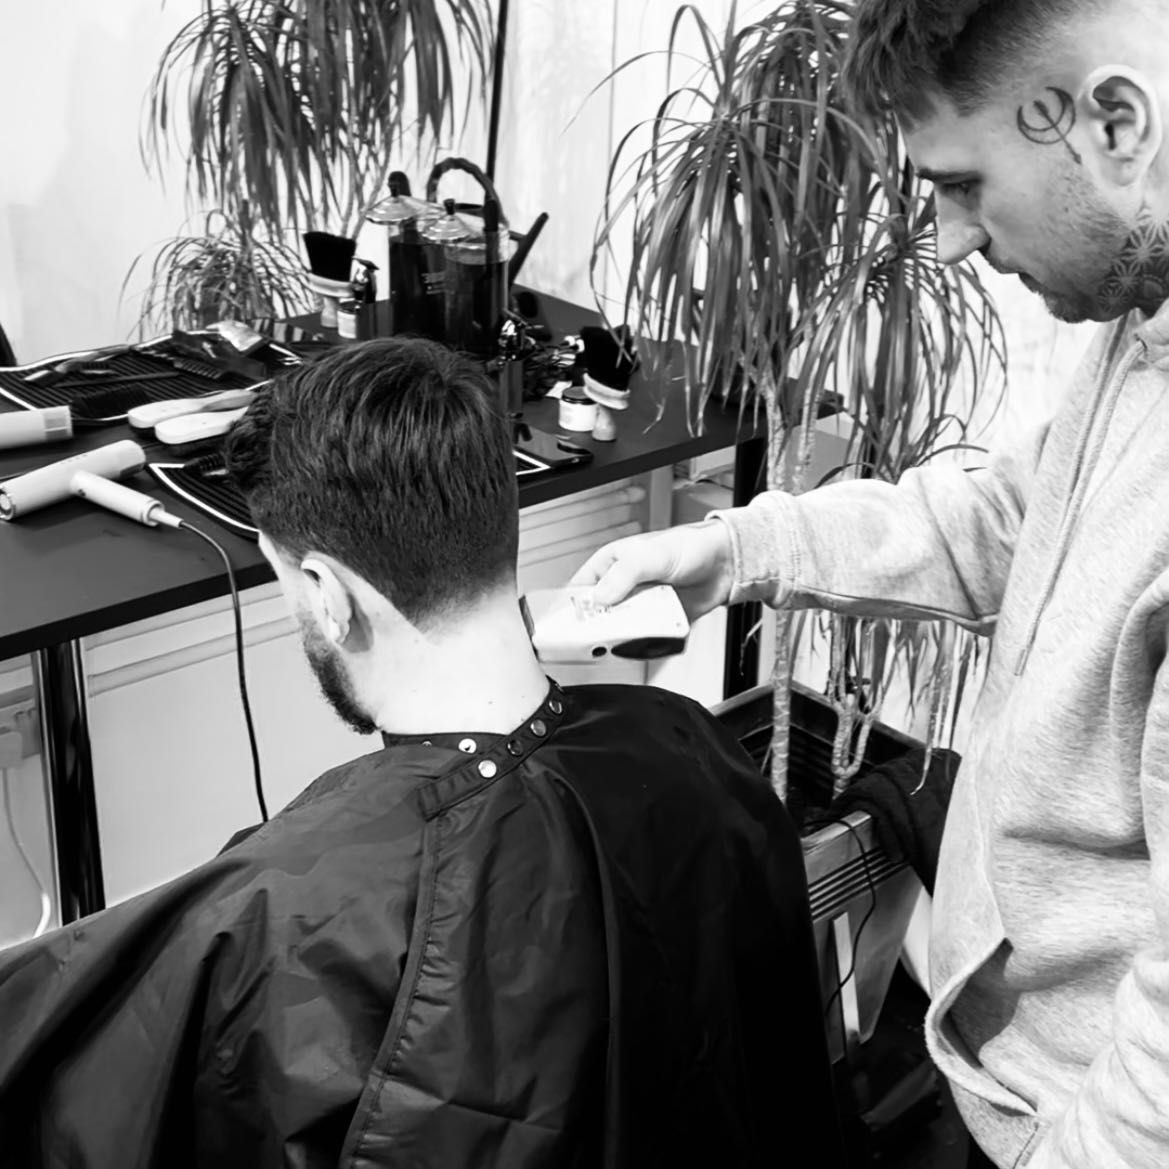 Connor - SEQUEL Barbershop